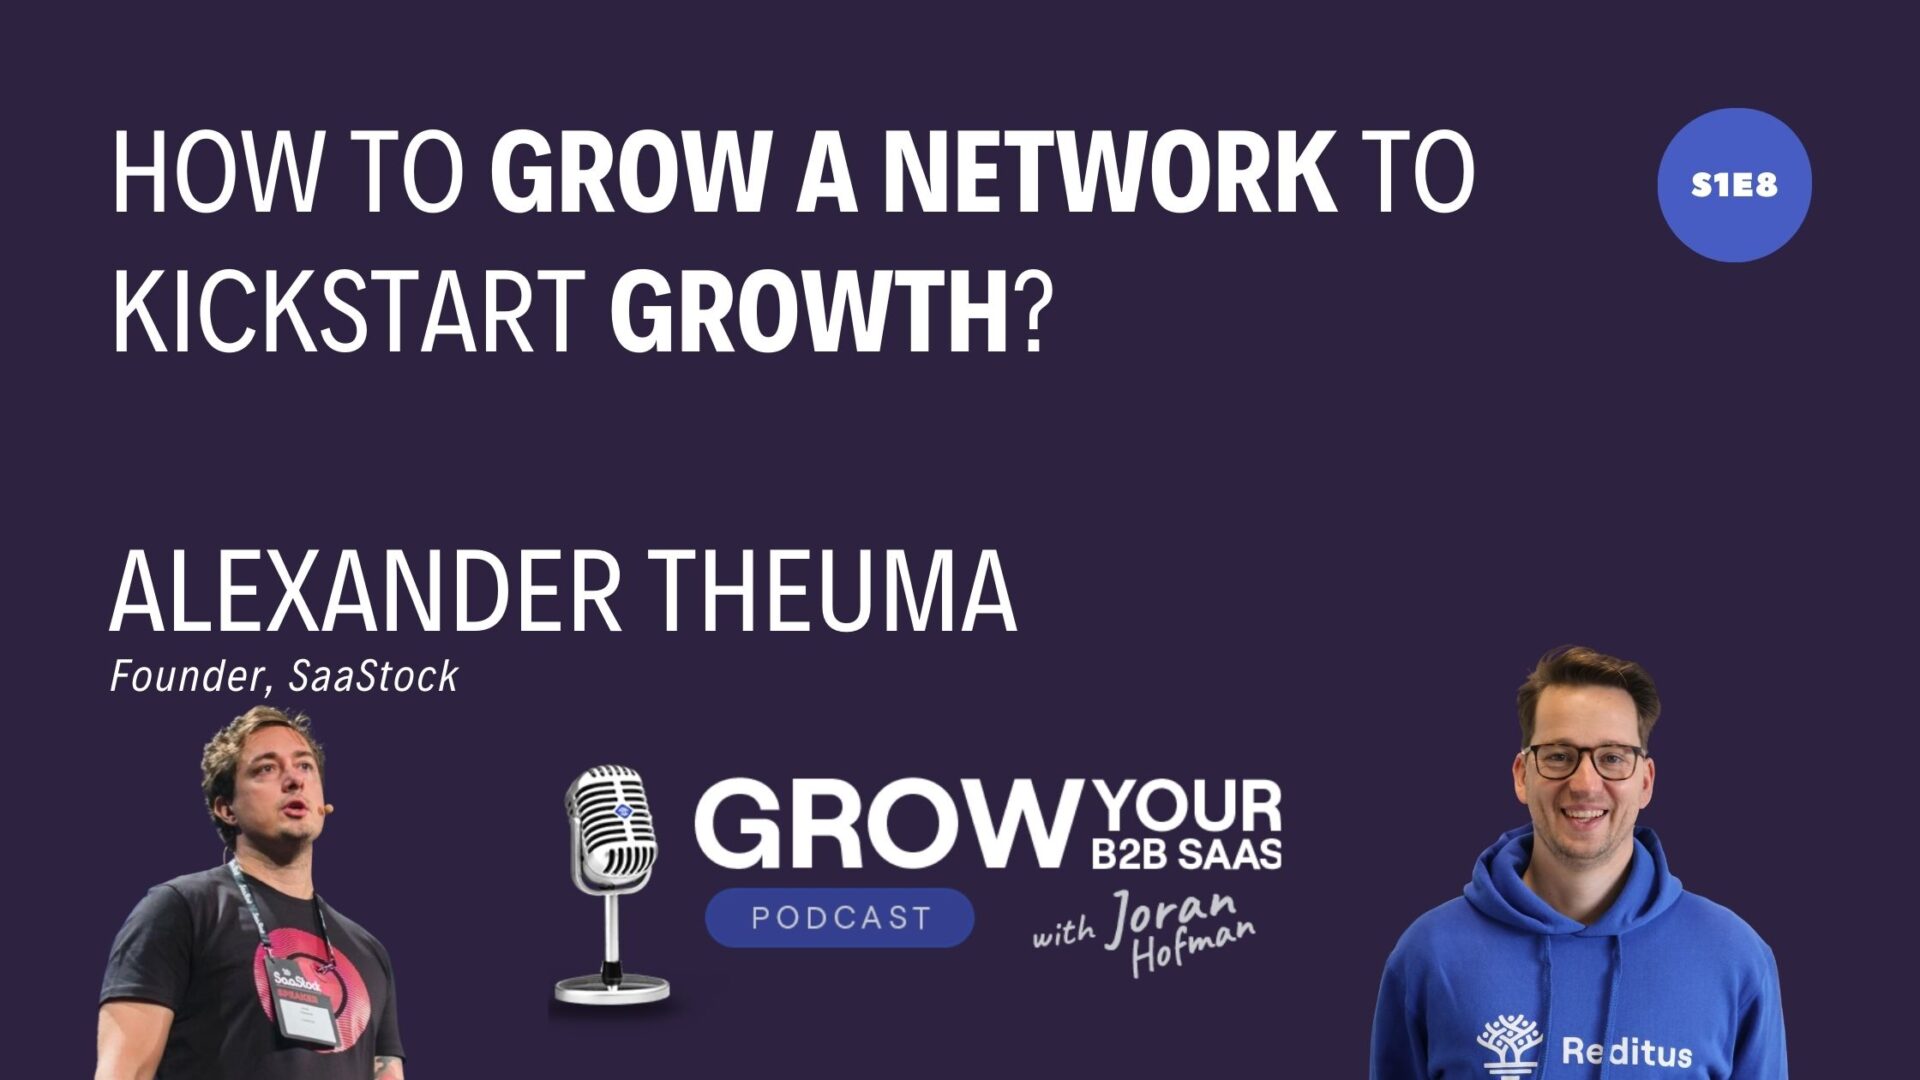 https://www.getreditus.com/podcast/s1e8-how-to-grow-a-network-to-kickstart-growth/